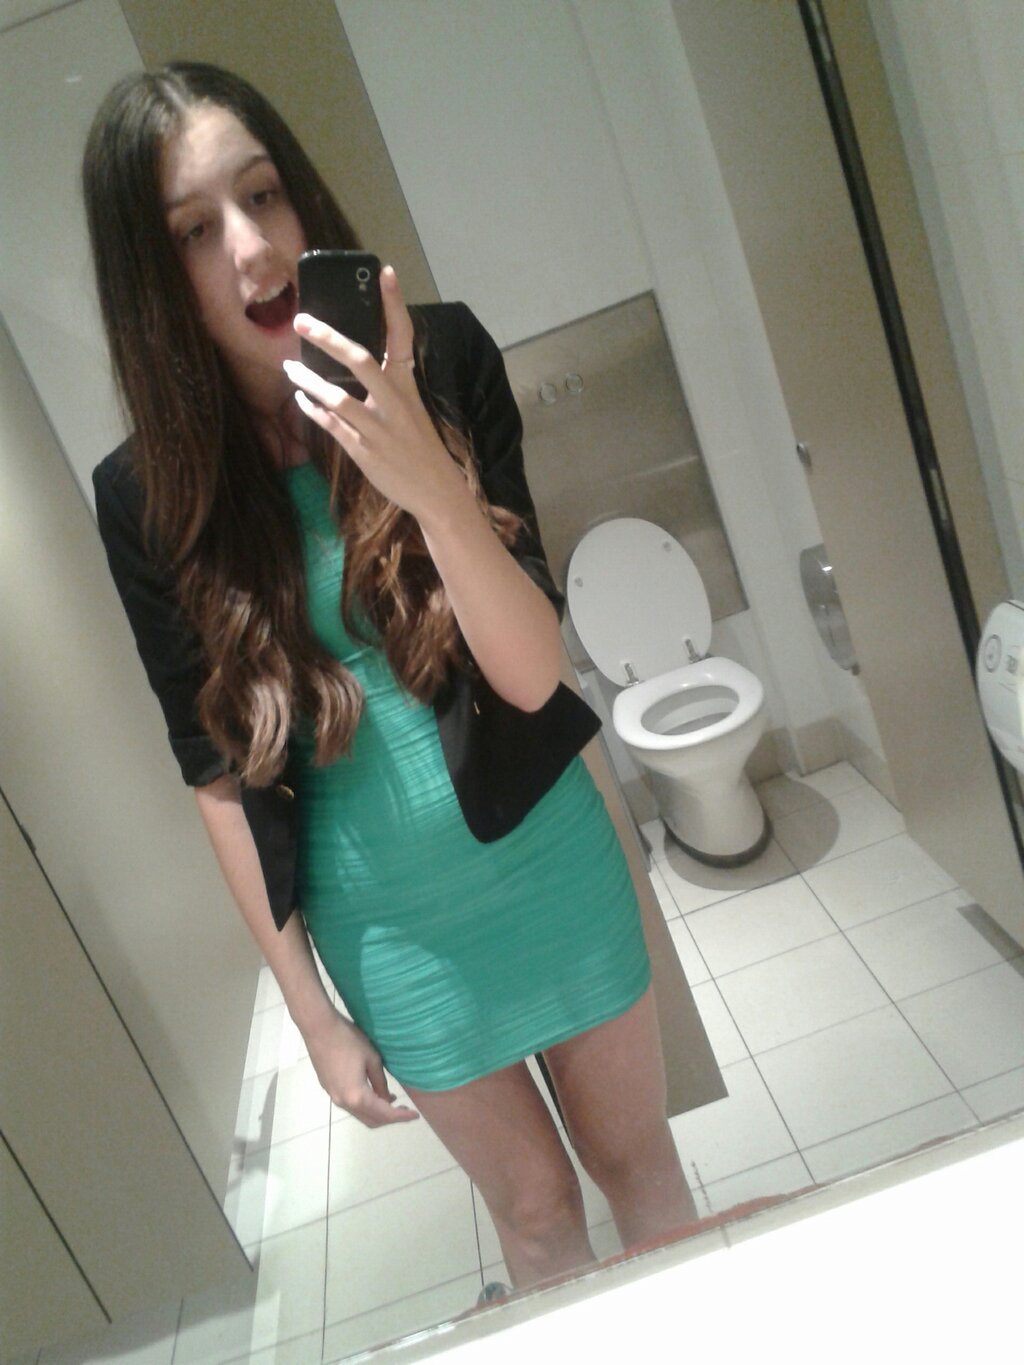 Teen Girl On Toilet